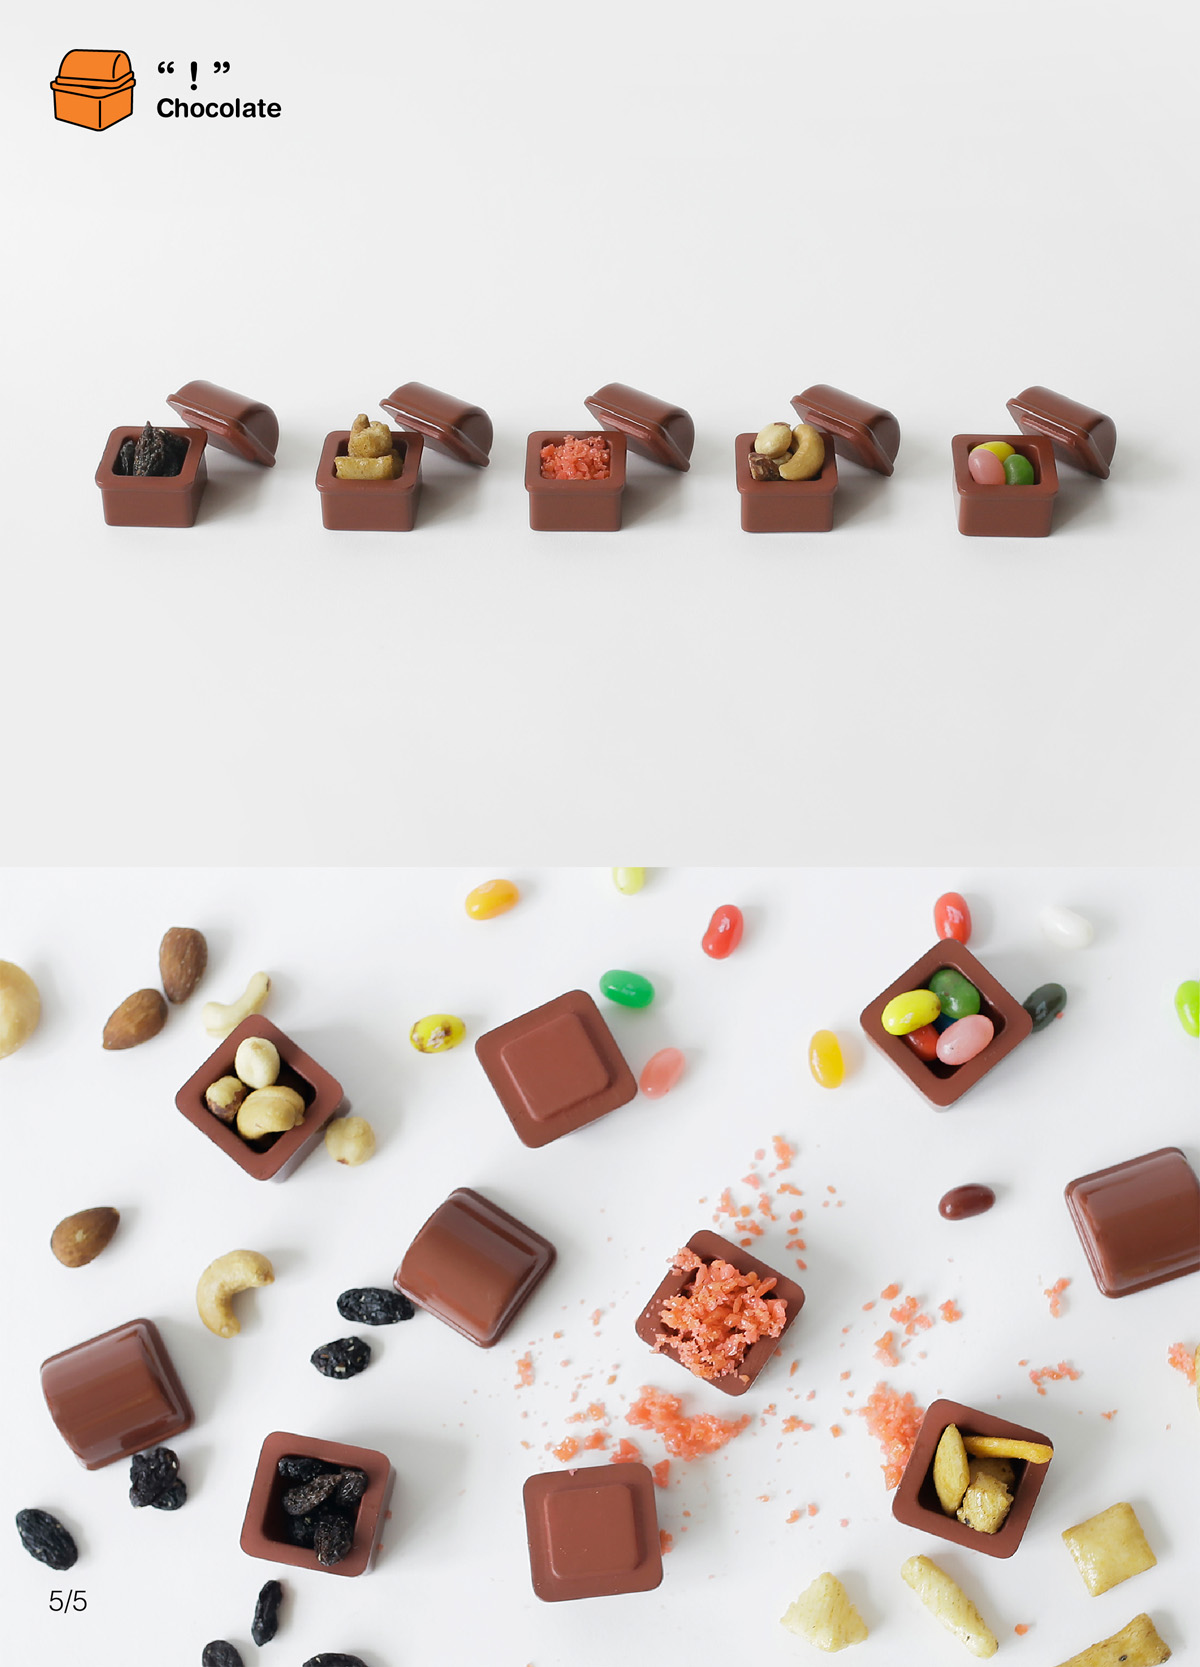 MUSE Design Winners - “!” Chocolate